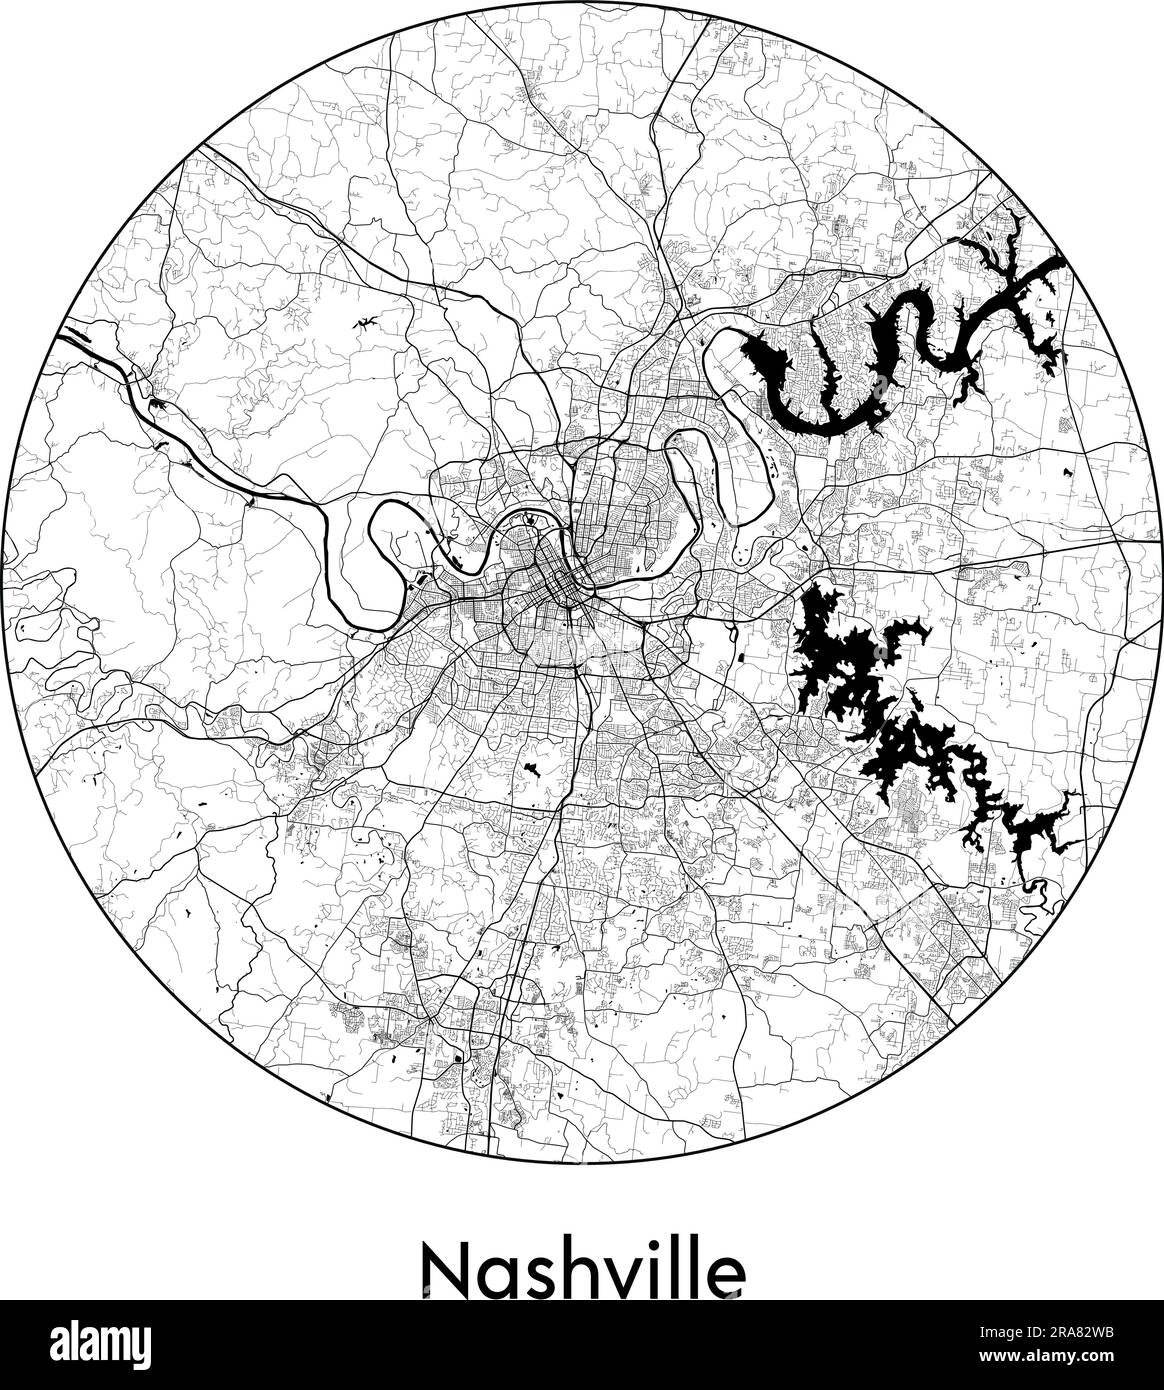 City Map Nashville United States North America vector illustration ...